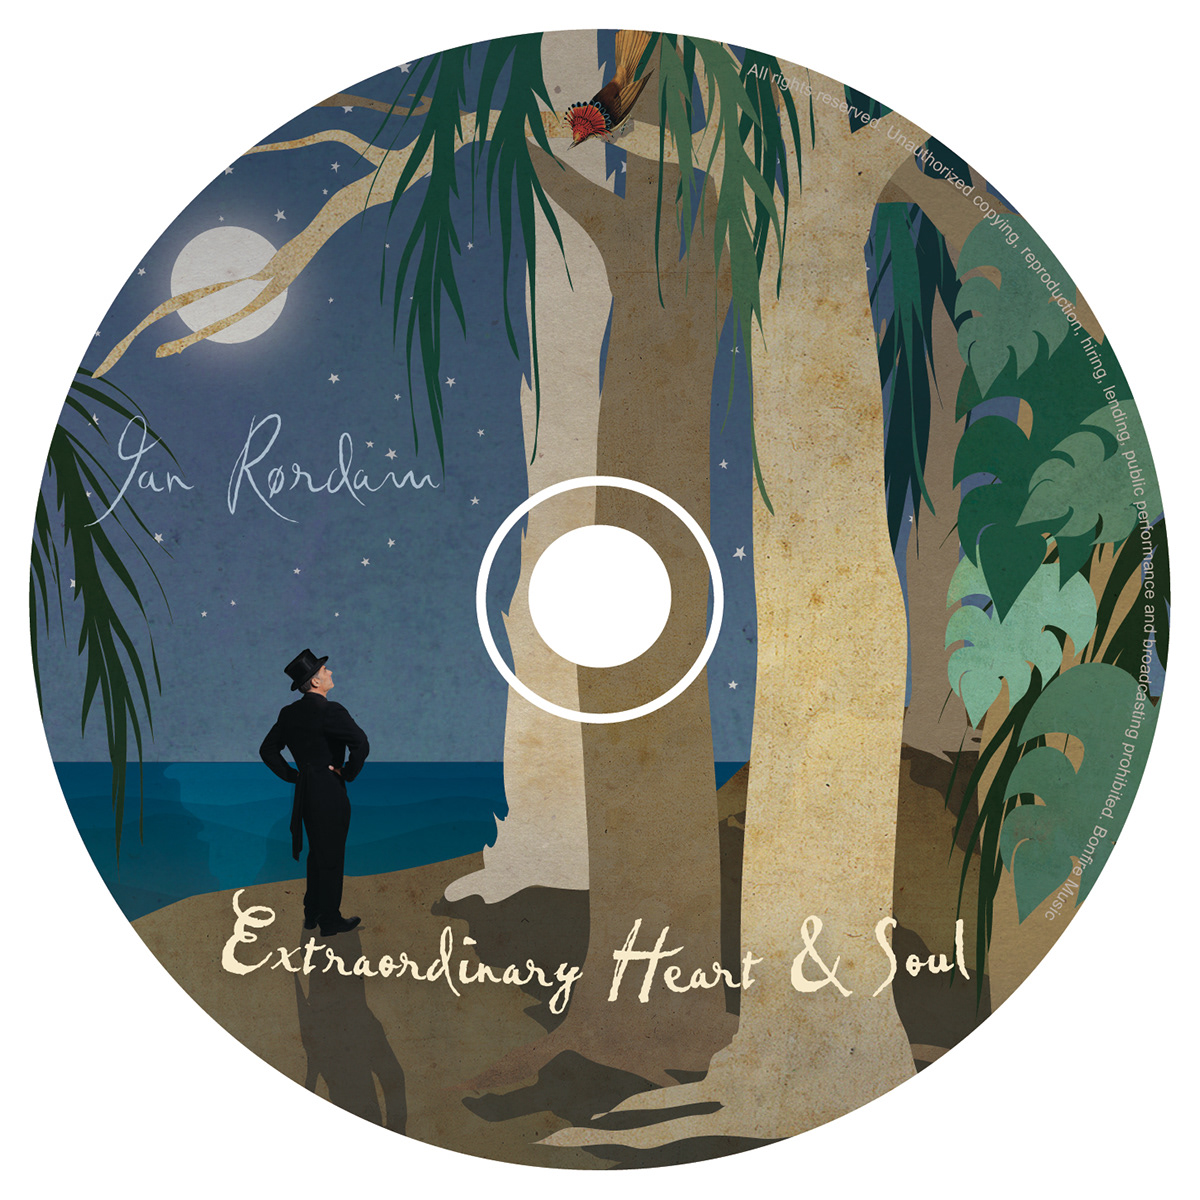 CD cover artwork